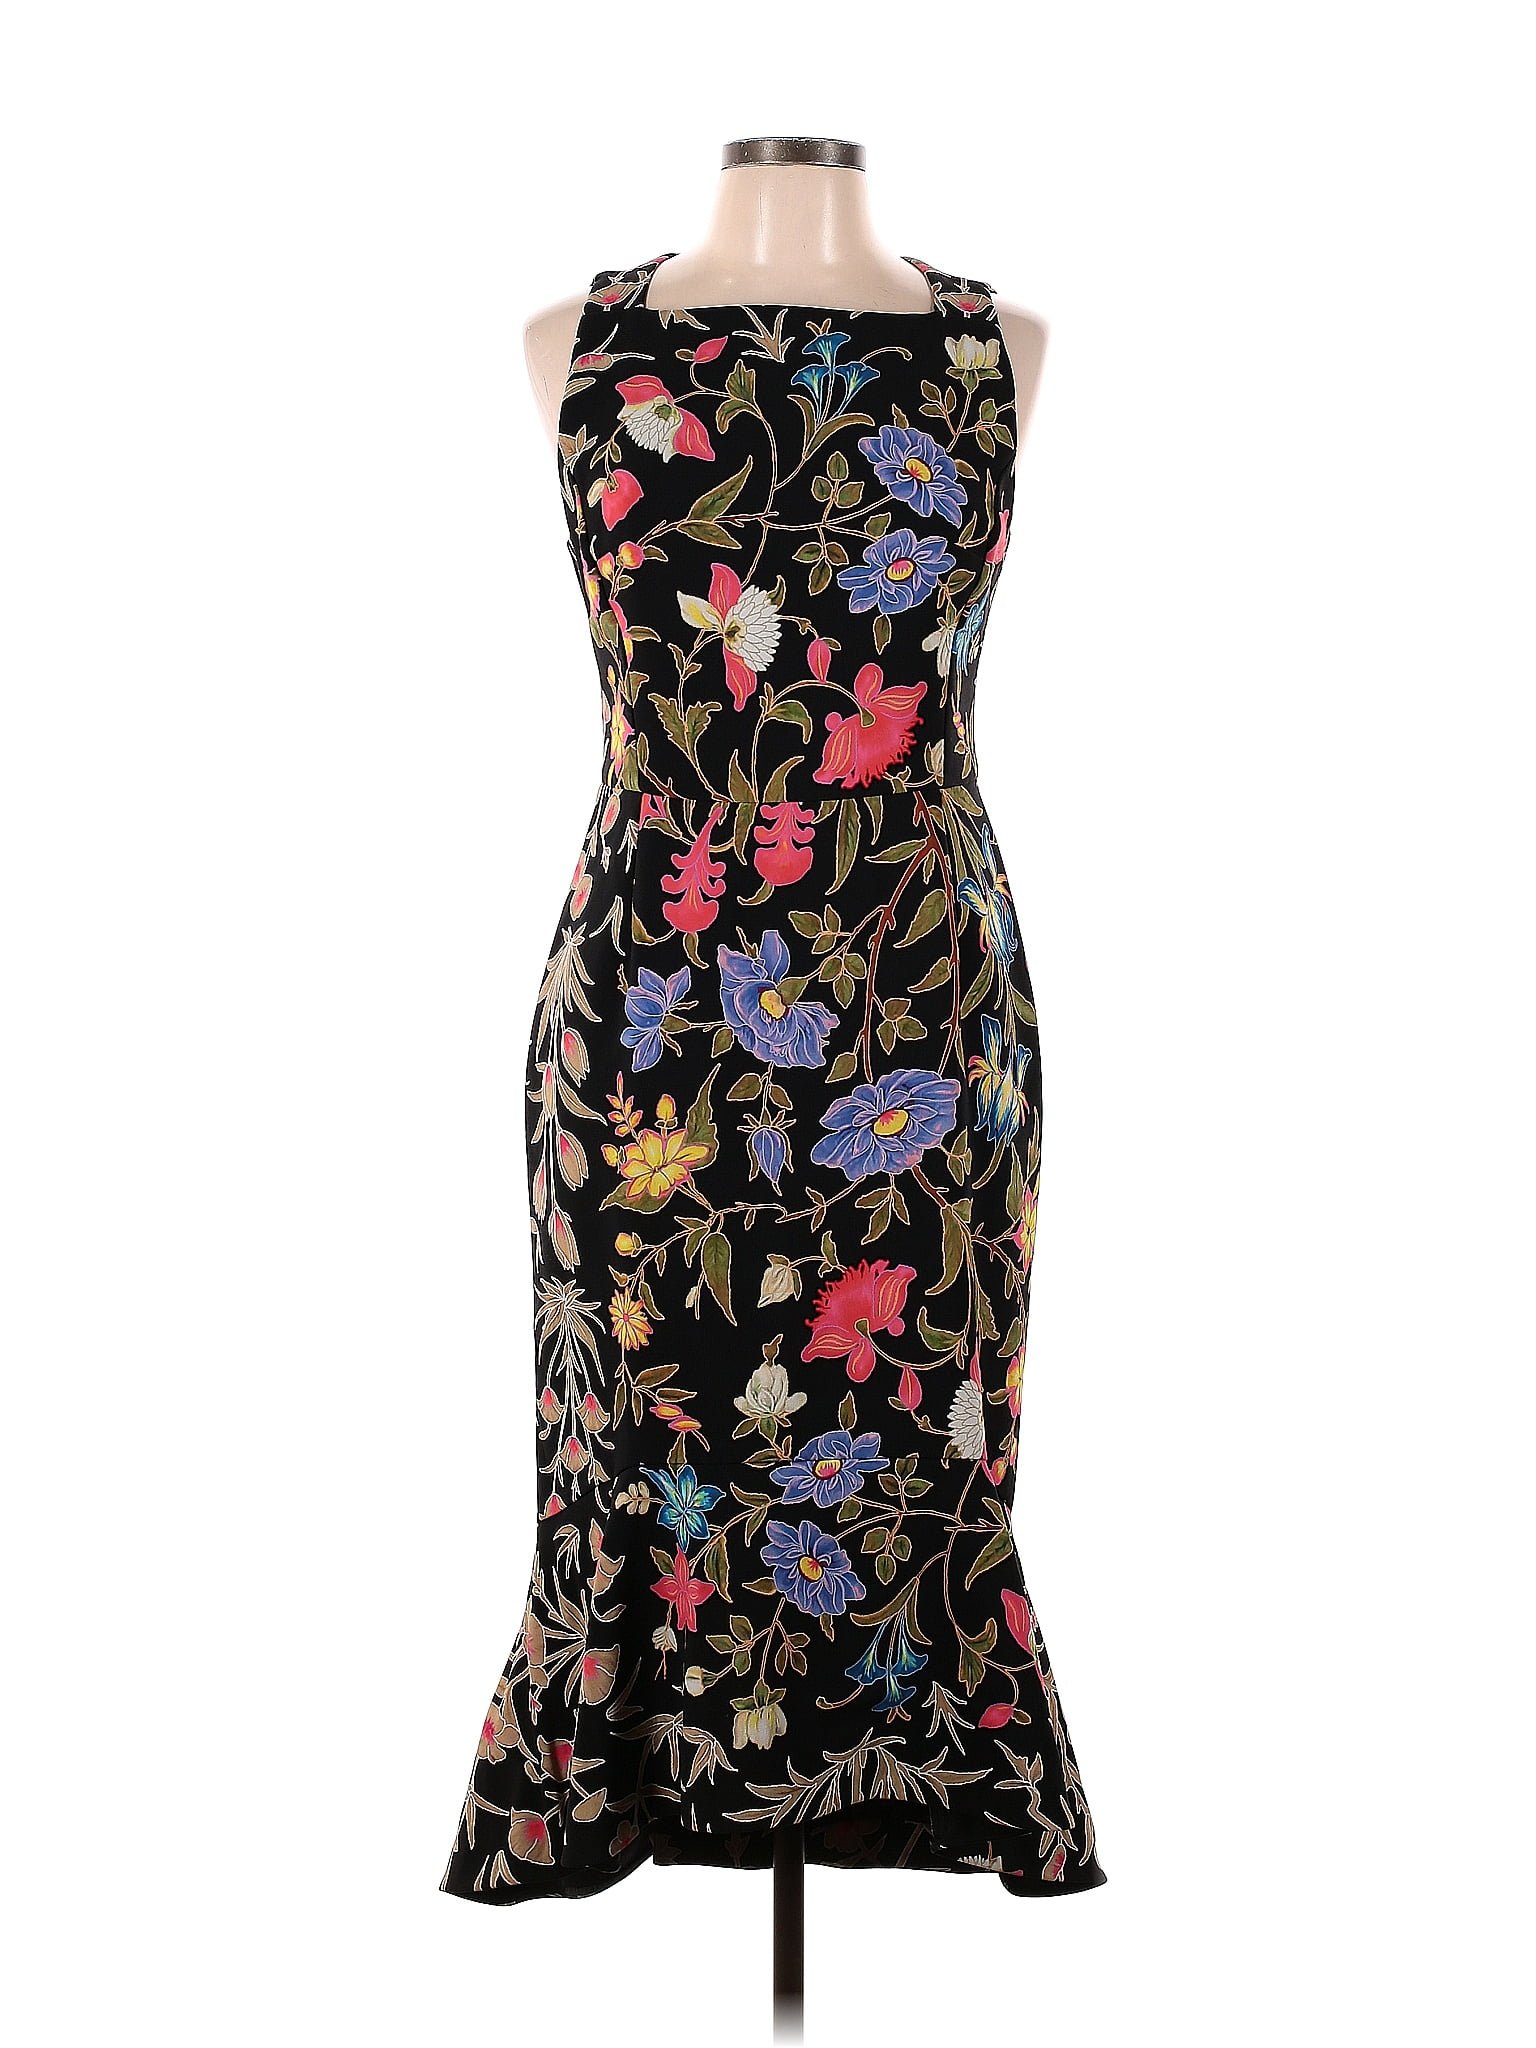 Peter Pilotto Floral Multi Color Black Kia Floral Frill Dress Size 14 ...